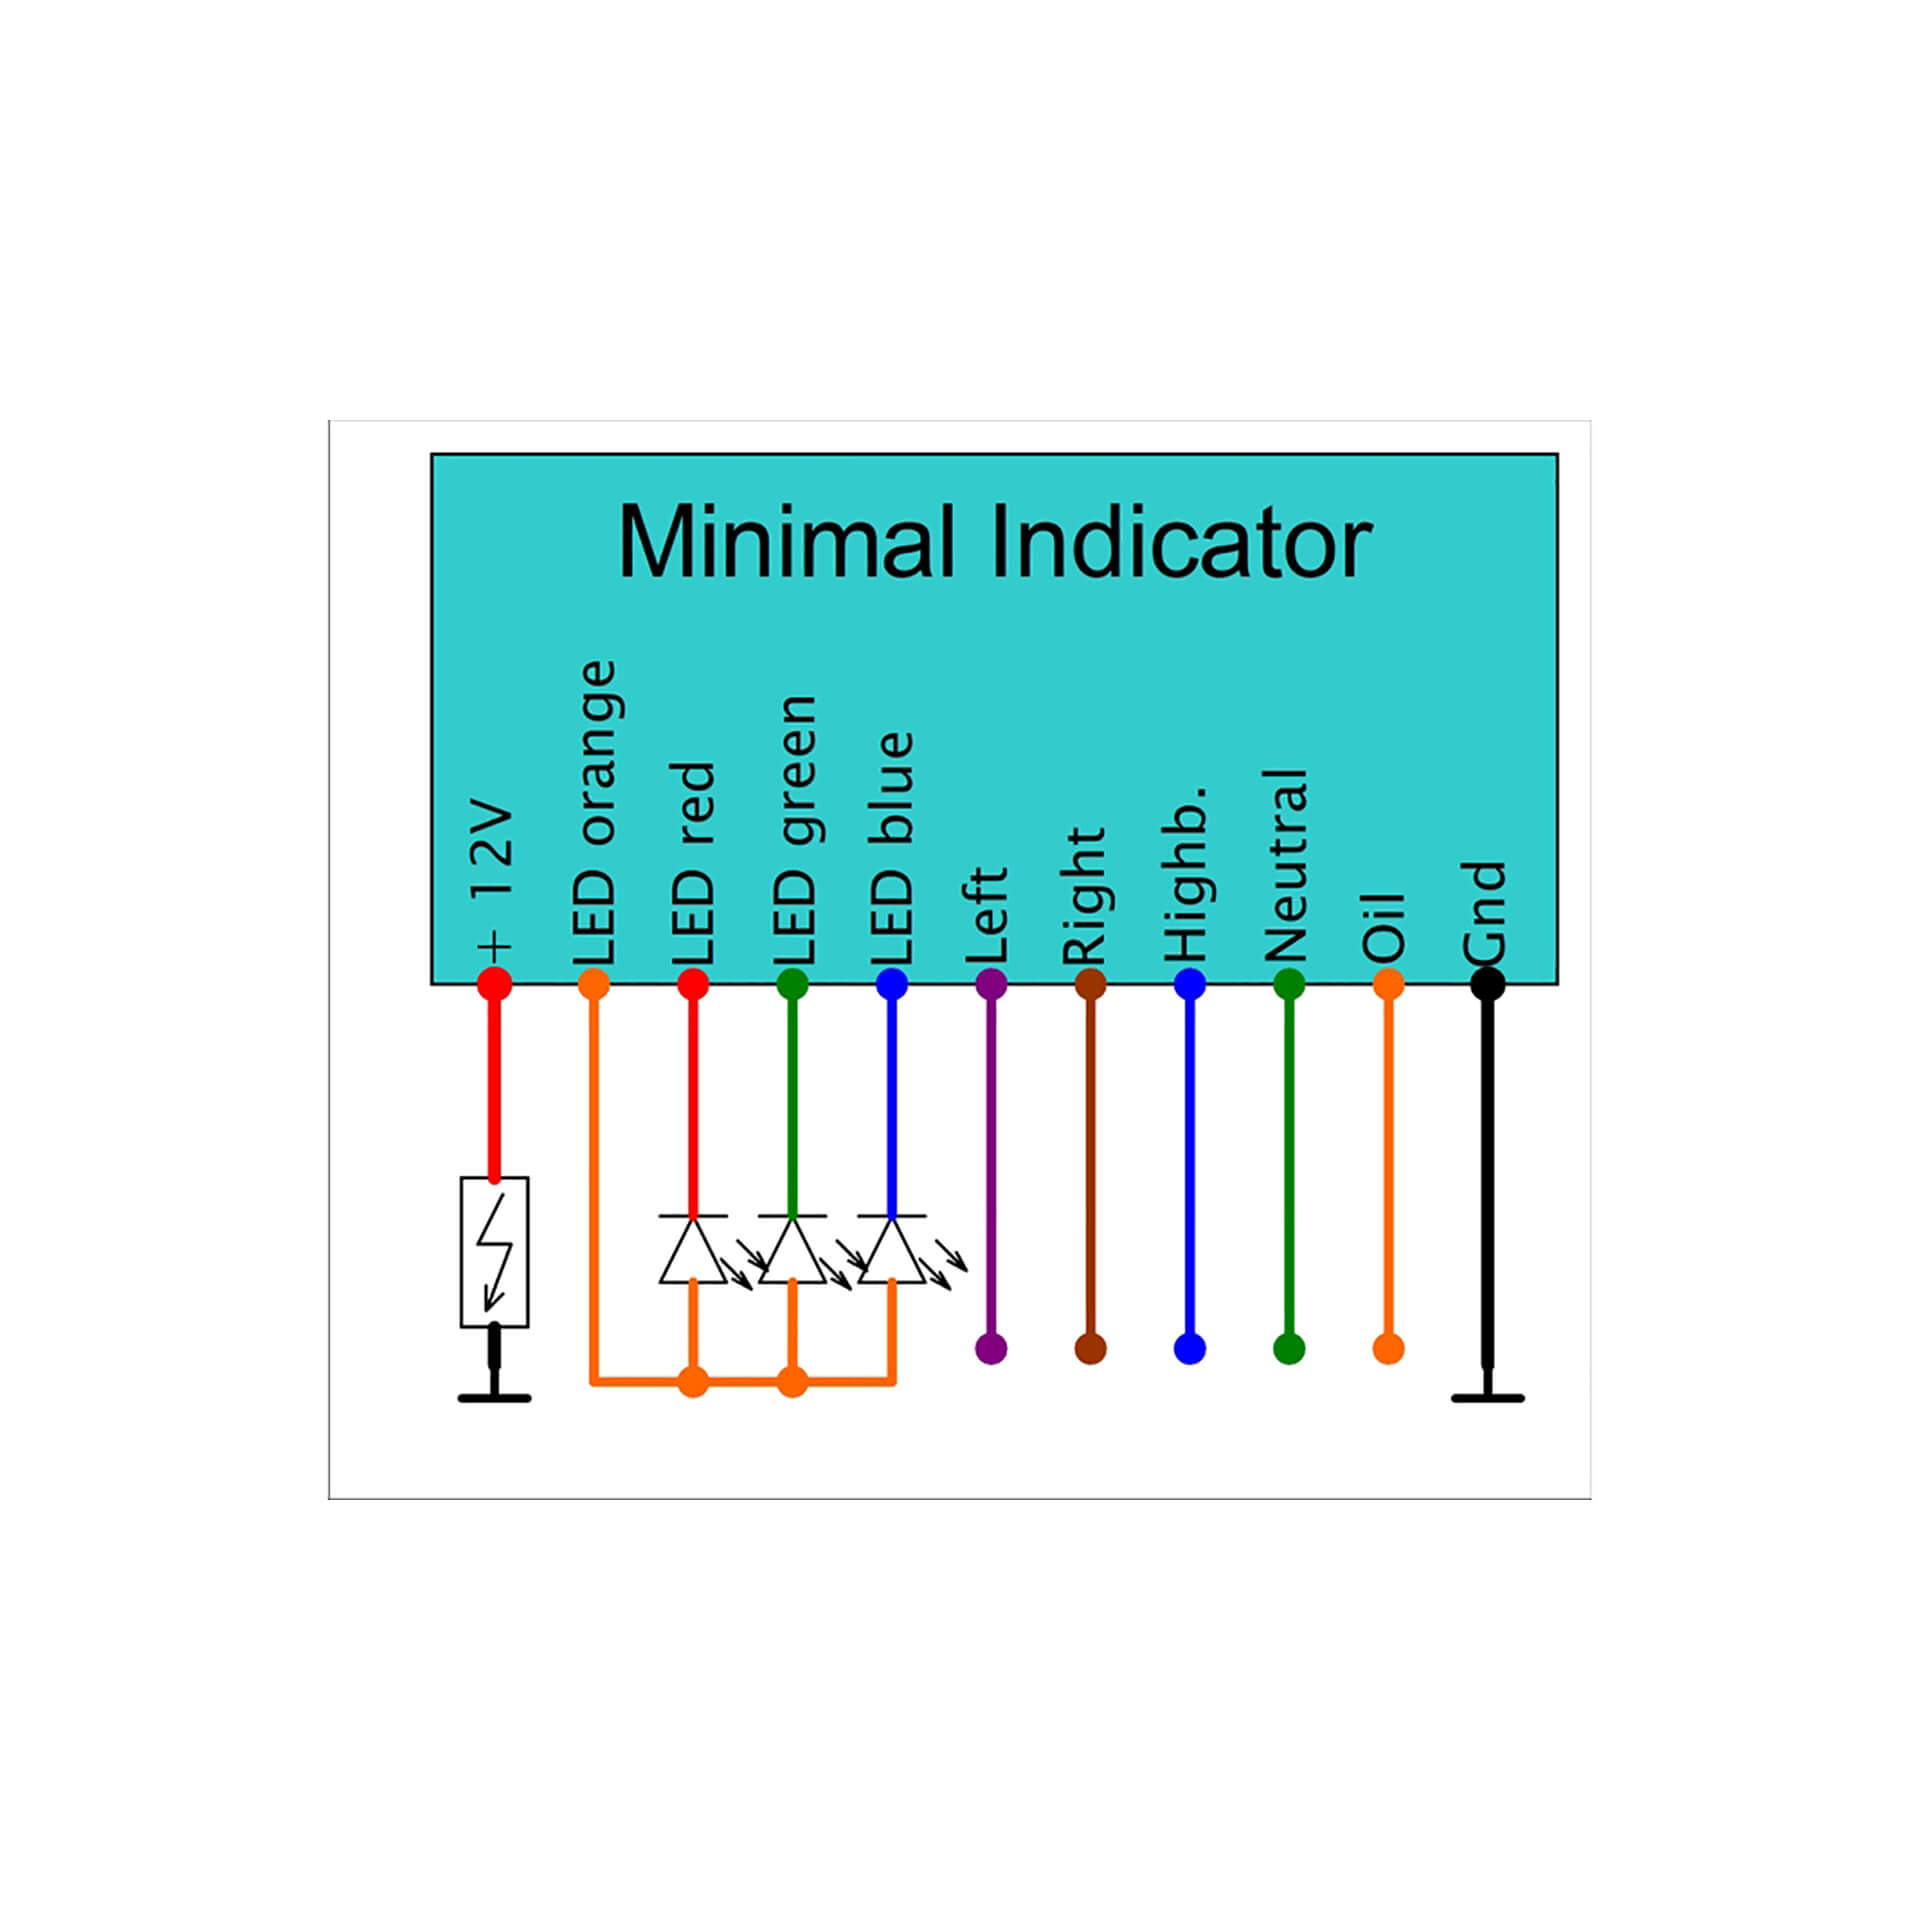 axel_joost Anzeigemodul Minimal Indicator